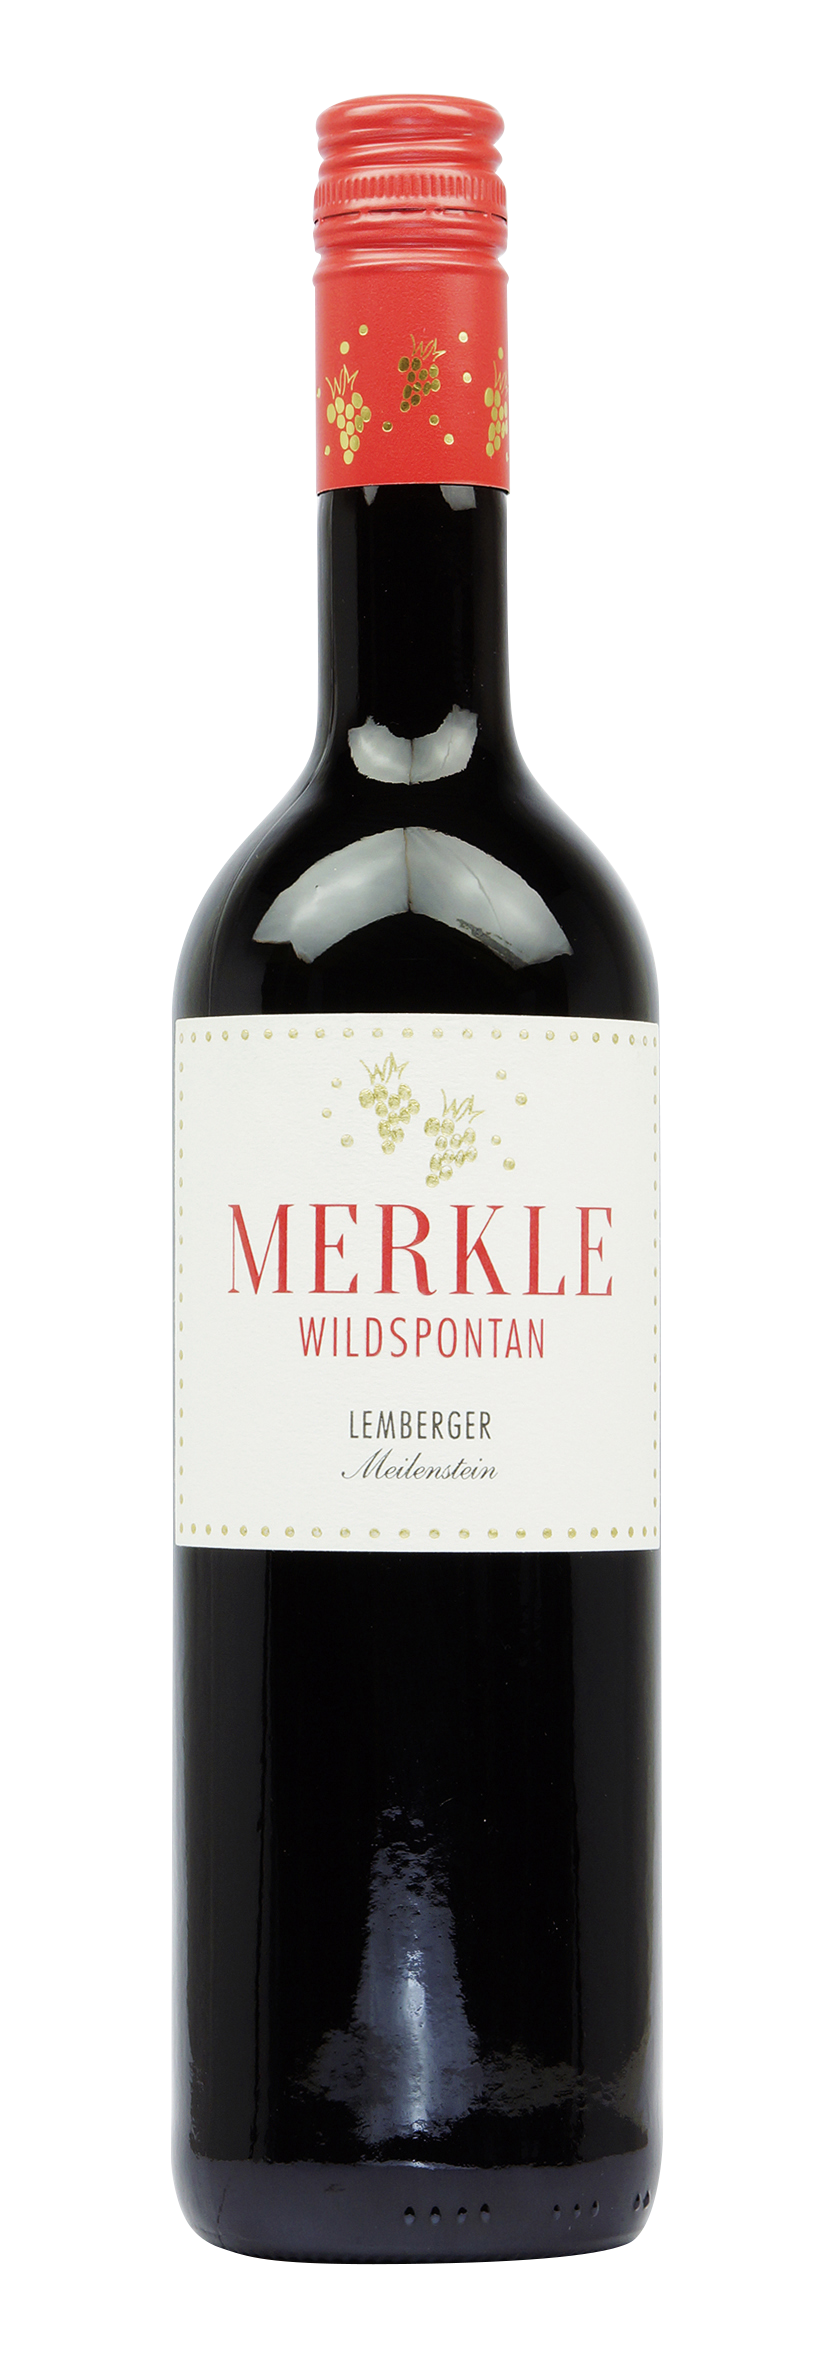 Merkle Wildspontan Lemberger Meilenstein 2017